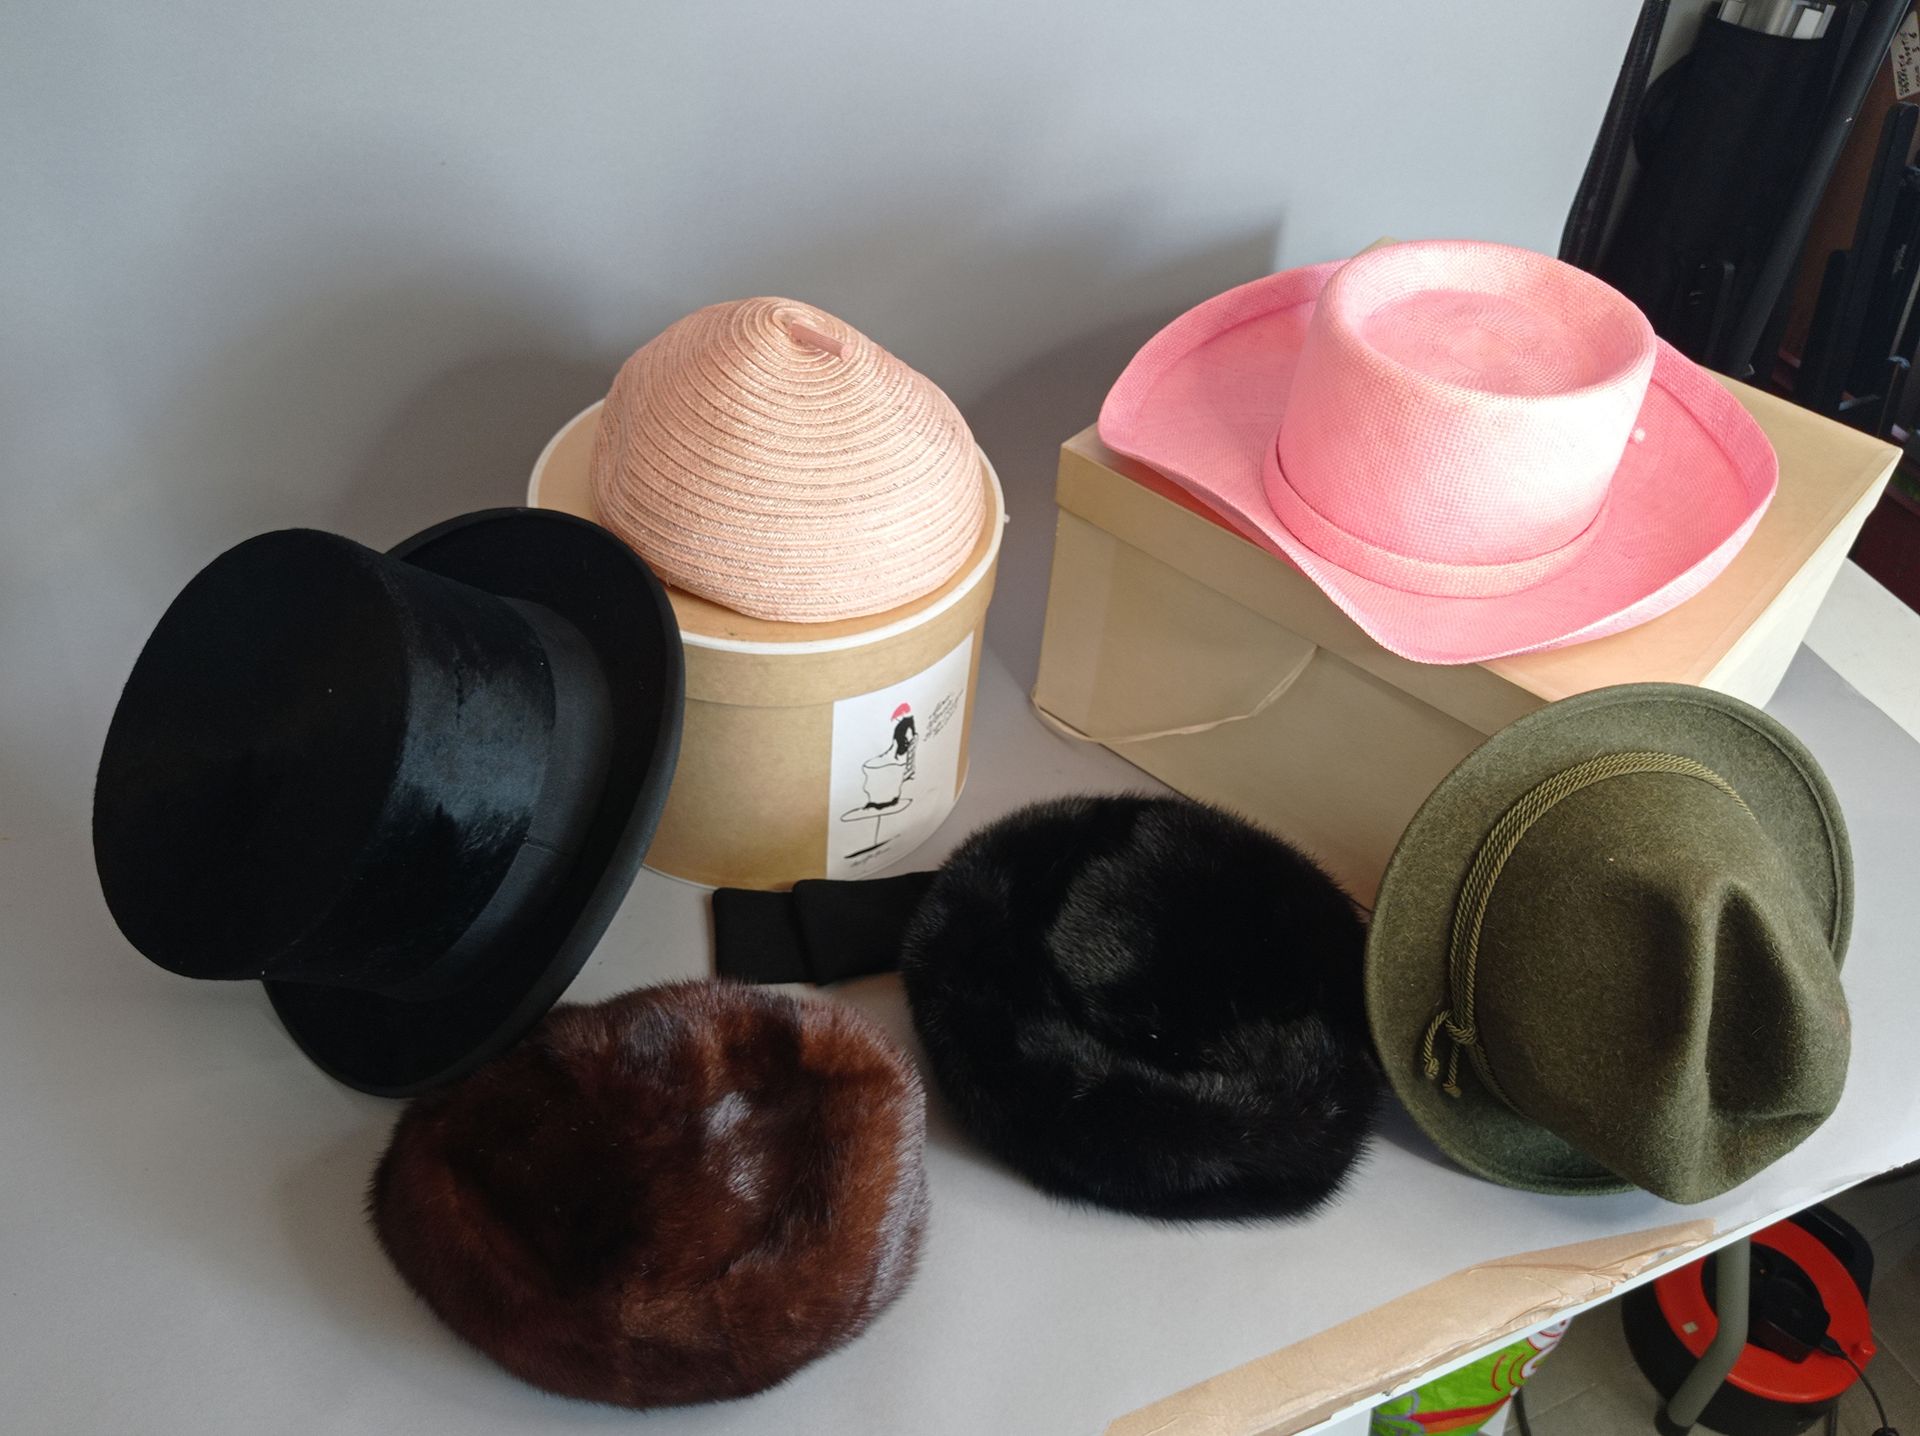 GIVENCHY Paris 粉红色草帽
附：Marie Mercié
帽子和其他两个
染色和磨损